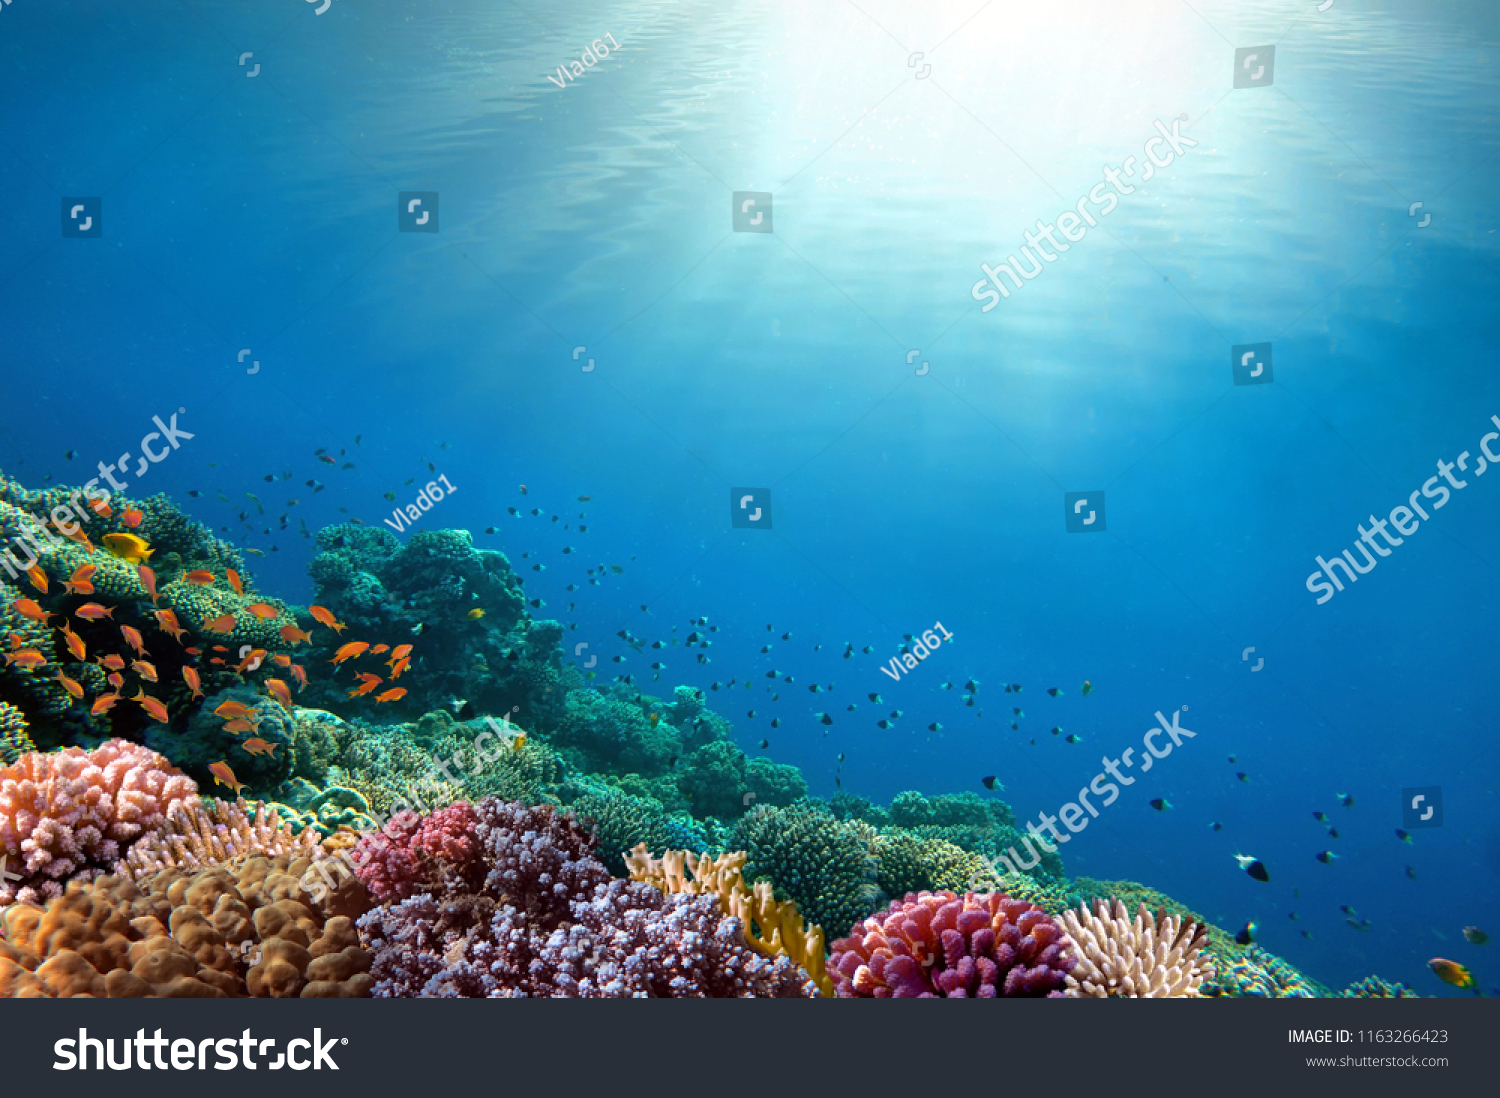 Underwater coral reef background. #1163266423